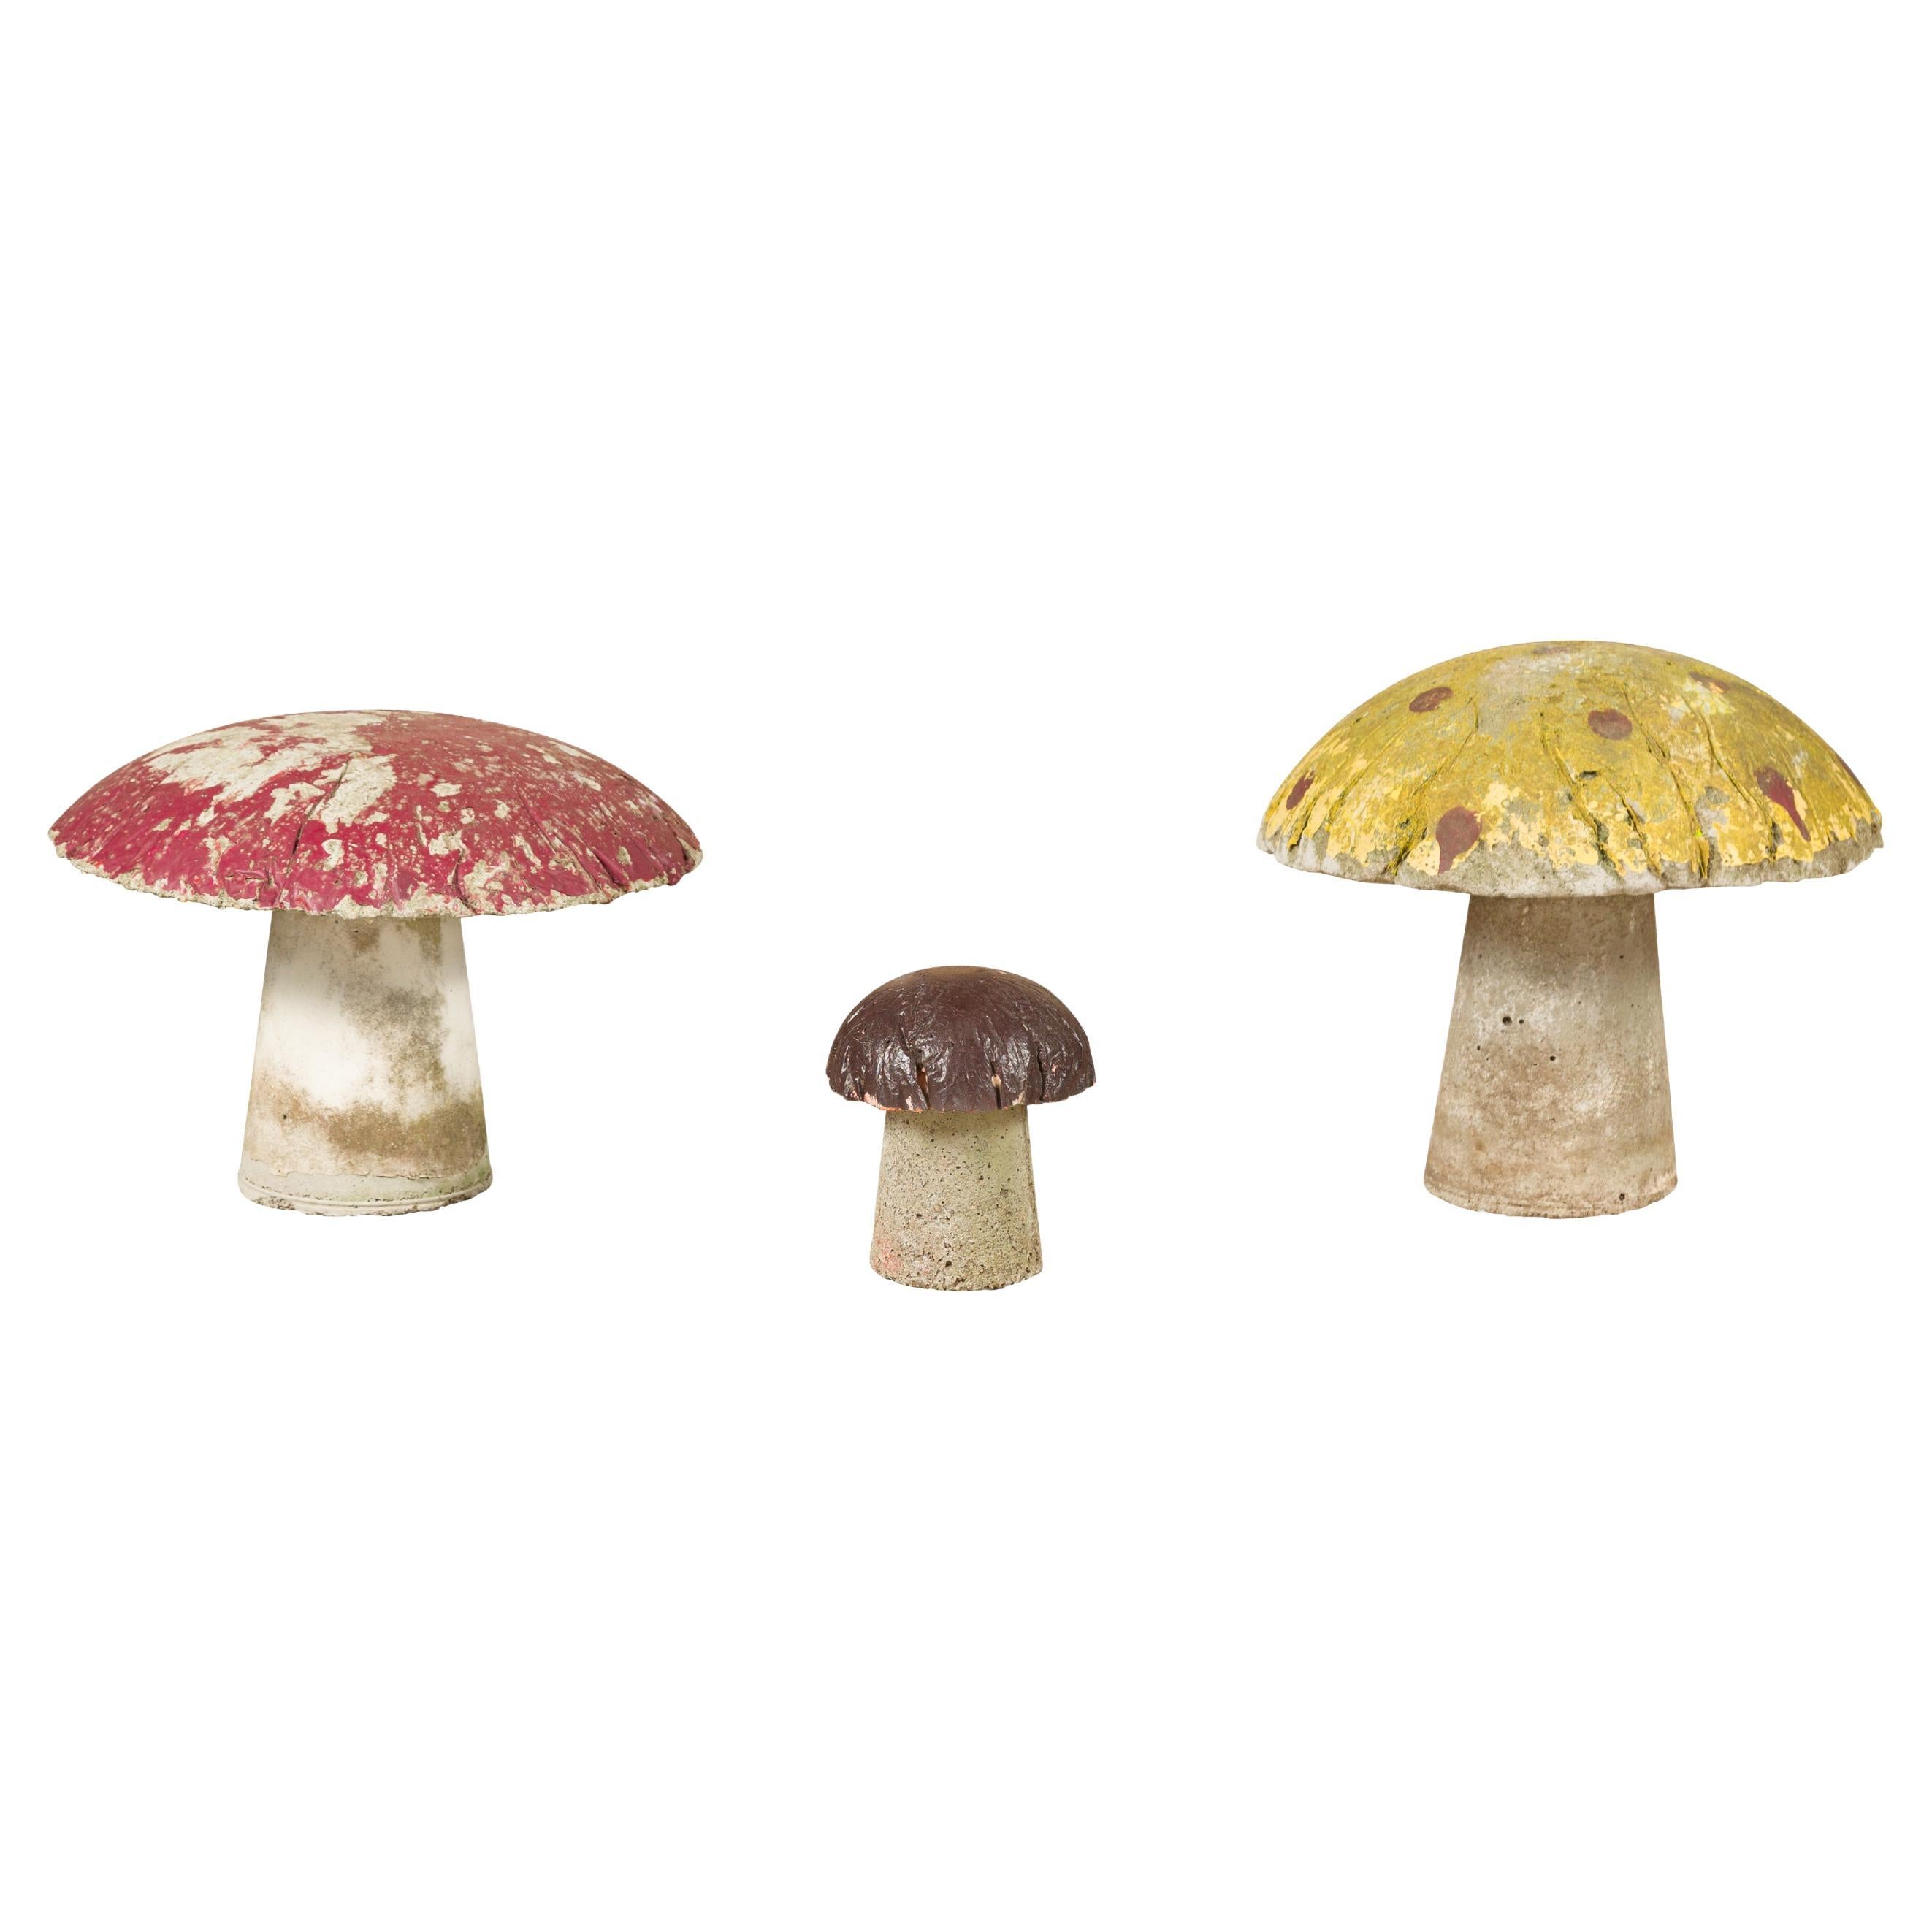 Set of Three American Midcentury Painted Concrete Mushroom Garden Ornaments